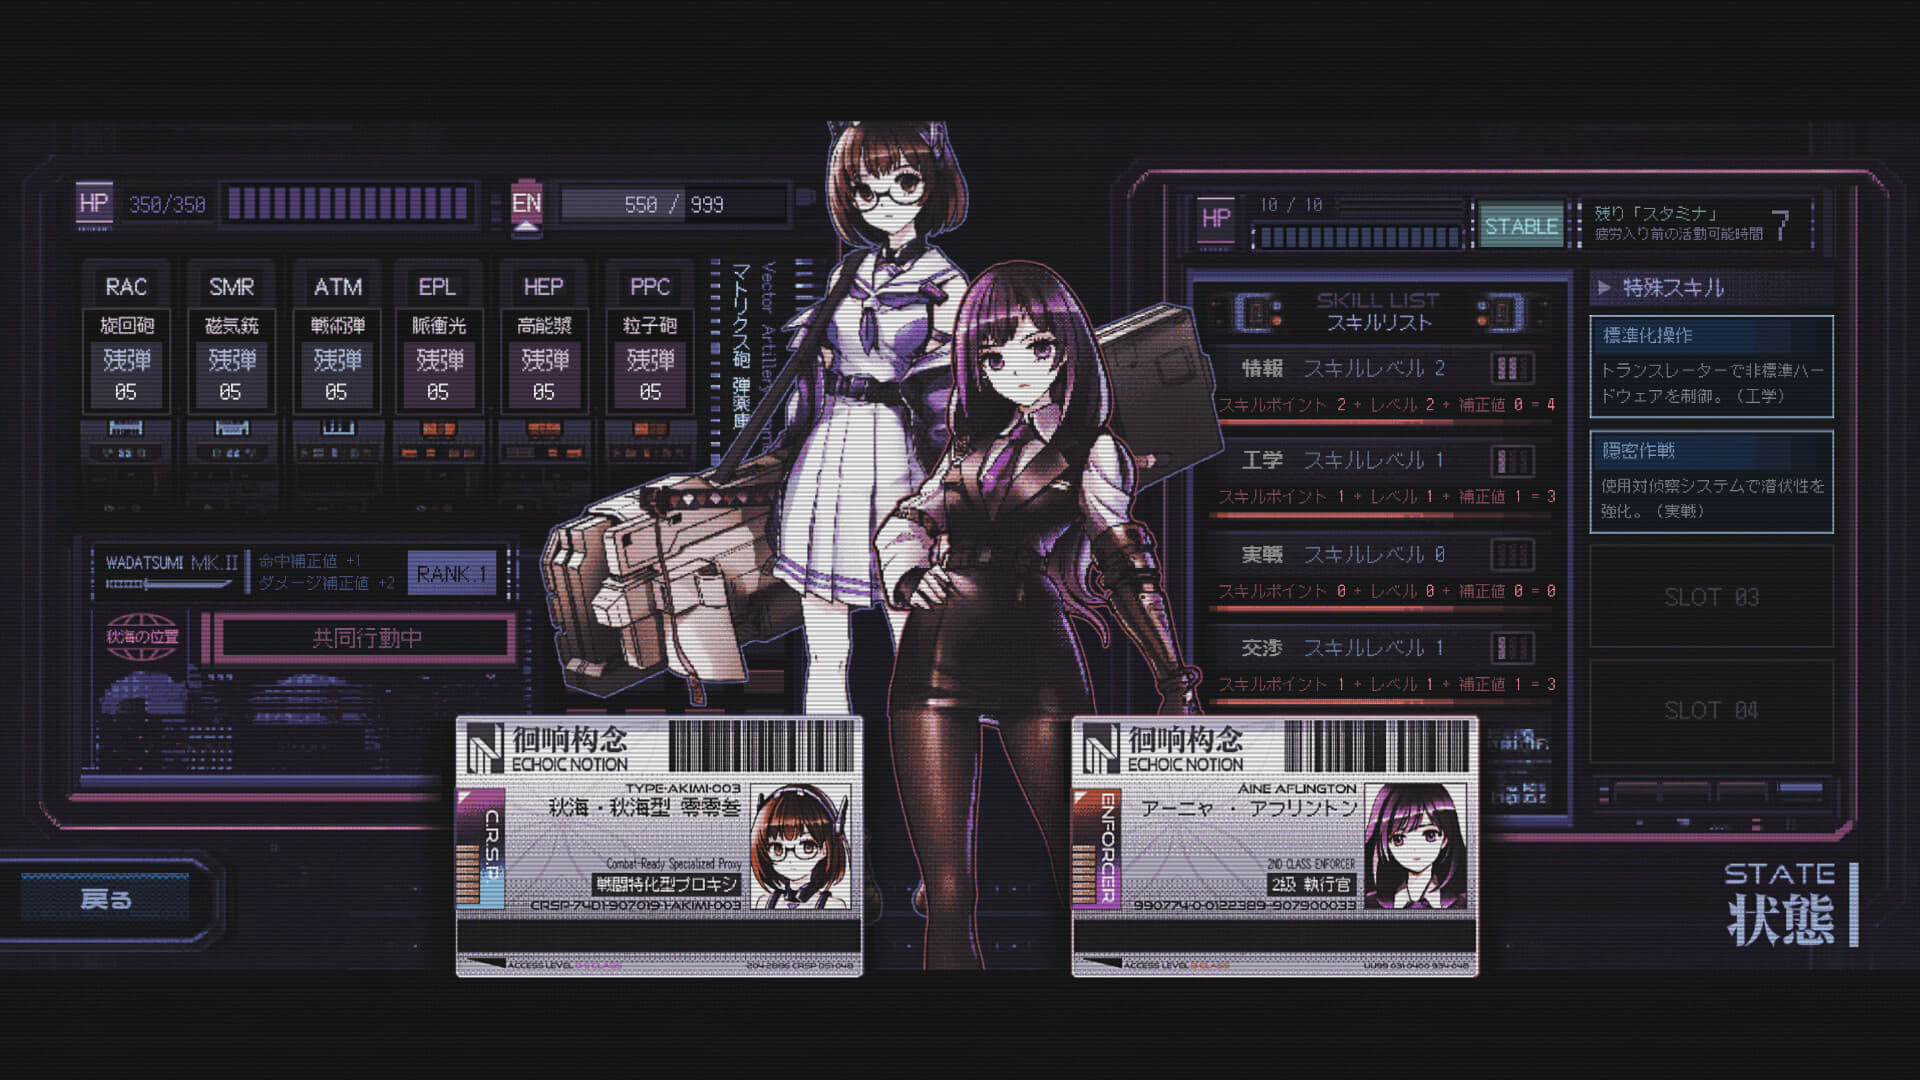 PC-98時代の美少女ゲームの魂を受け継いだ新作『スターヴェイル・プロトコル』が日本語に対応決定_003